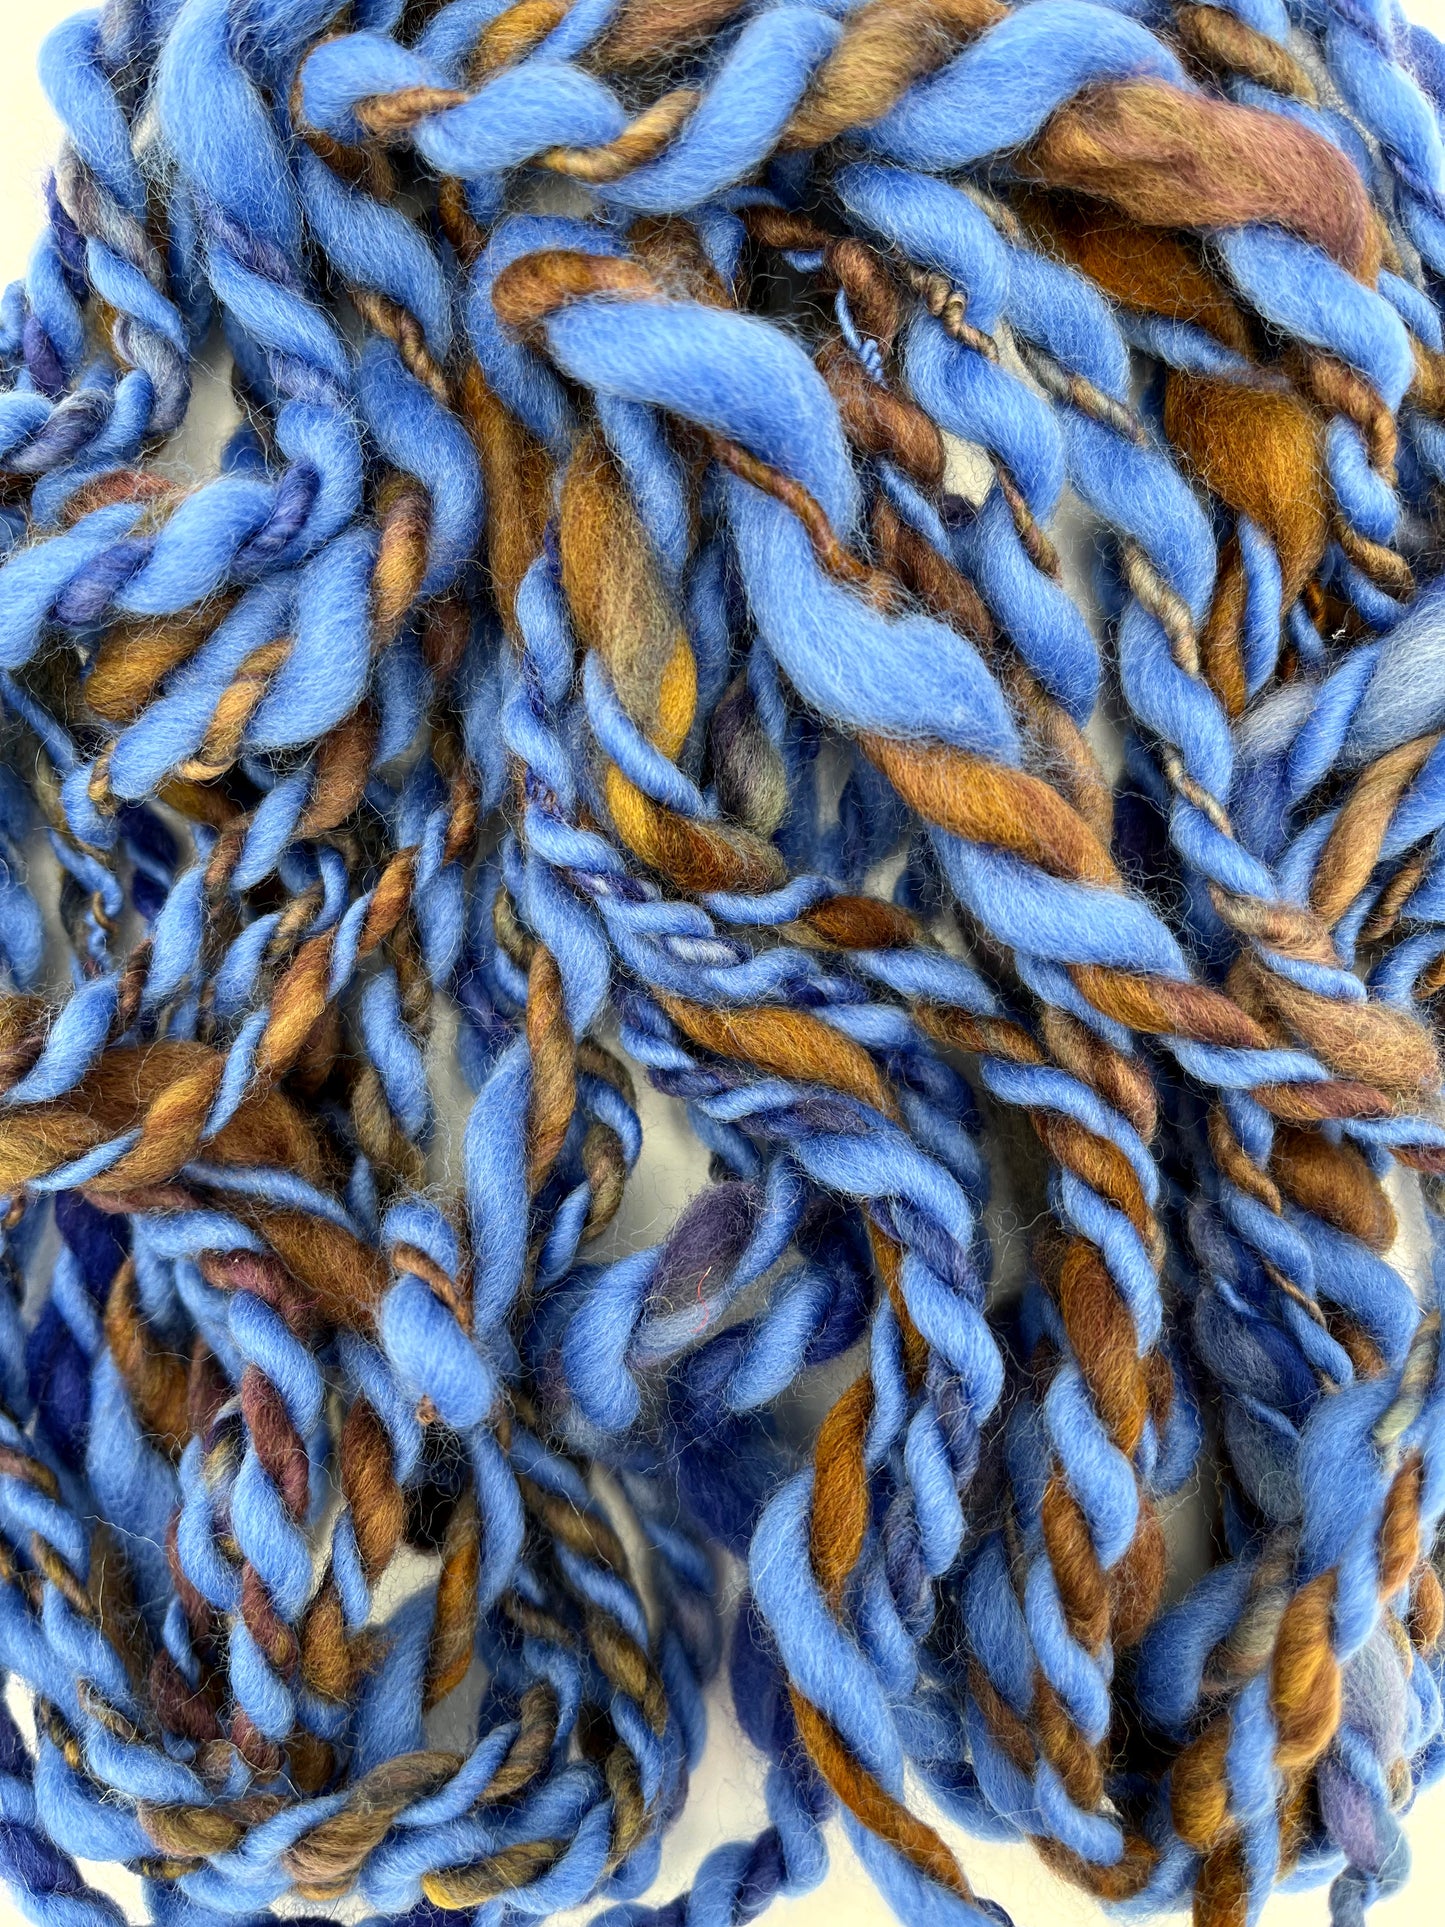 Blue & Copper Handspun Yarn